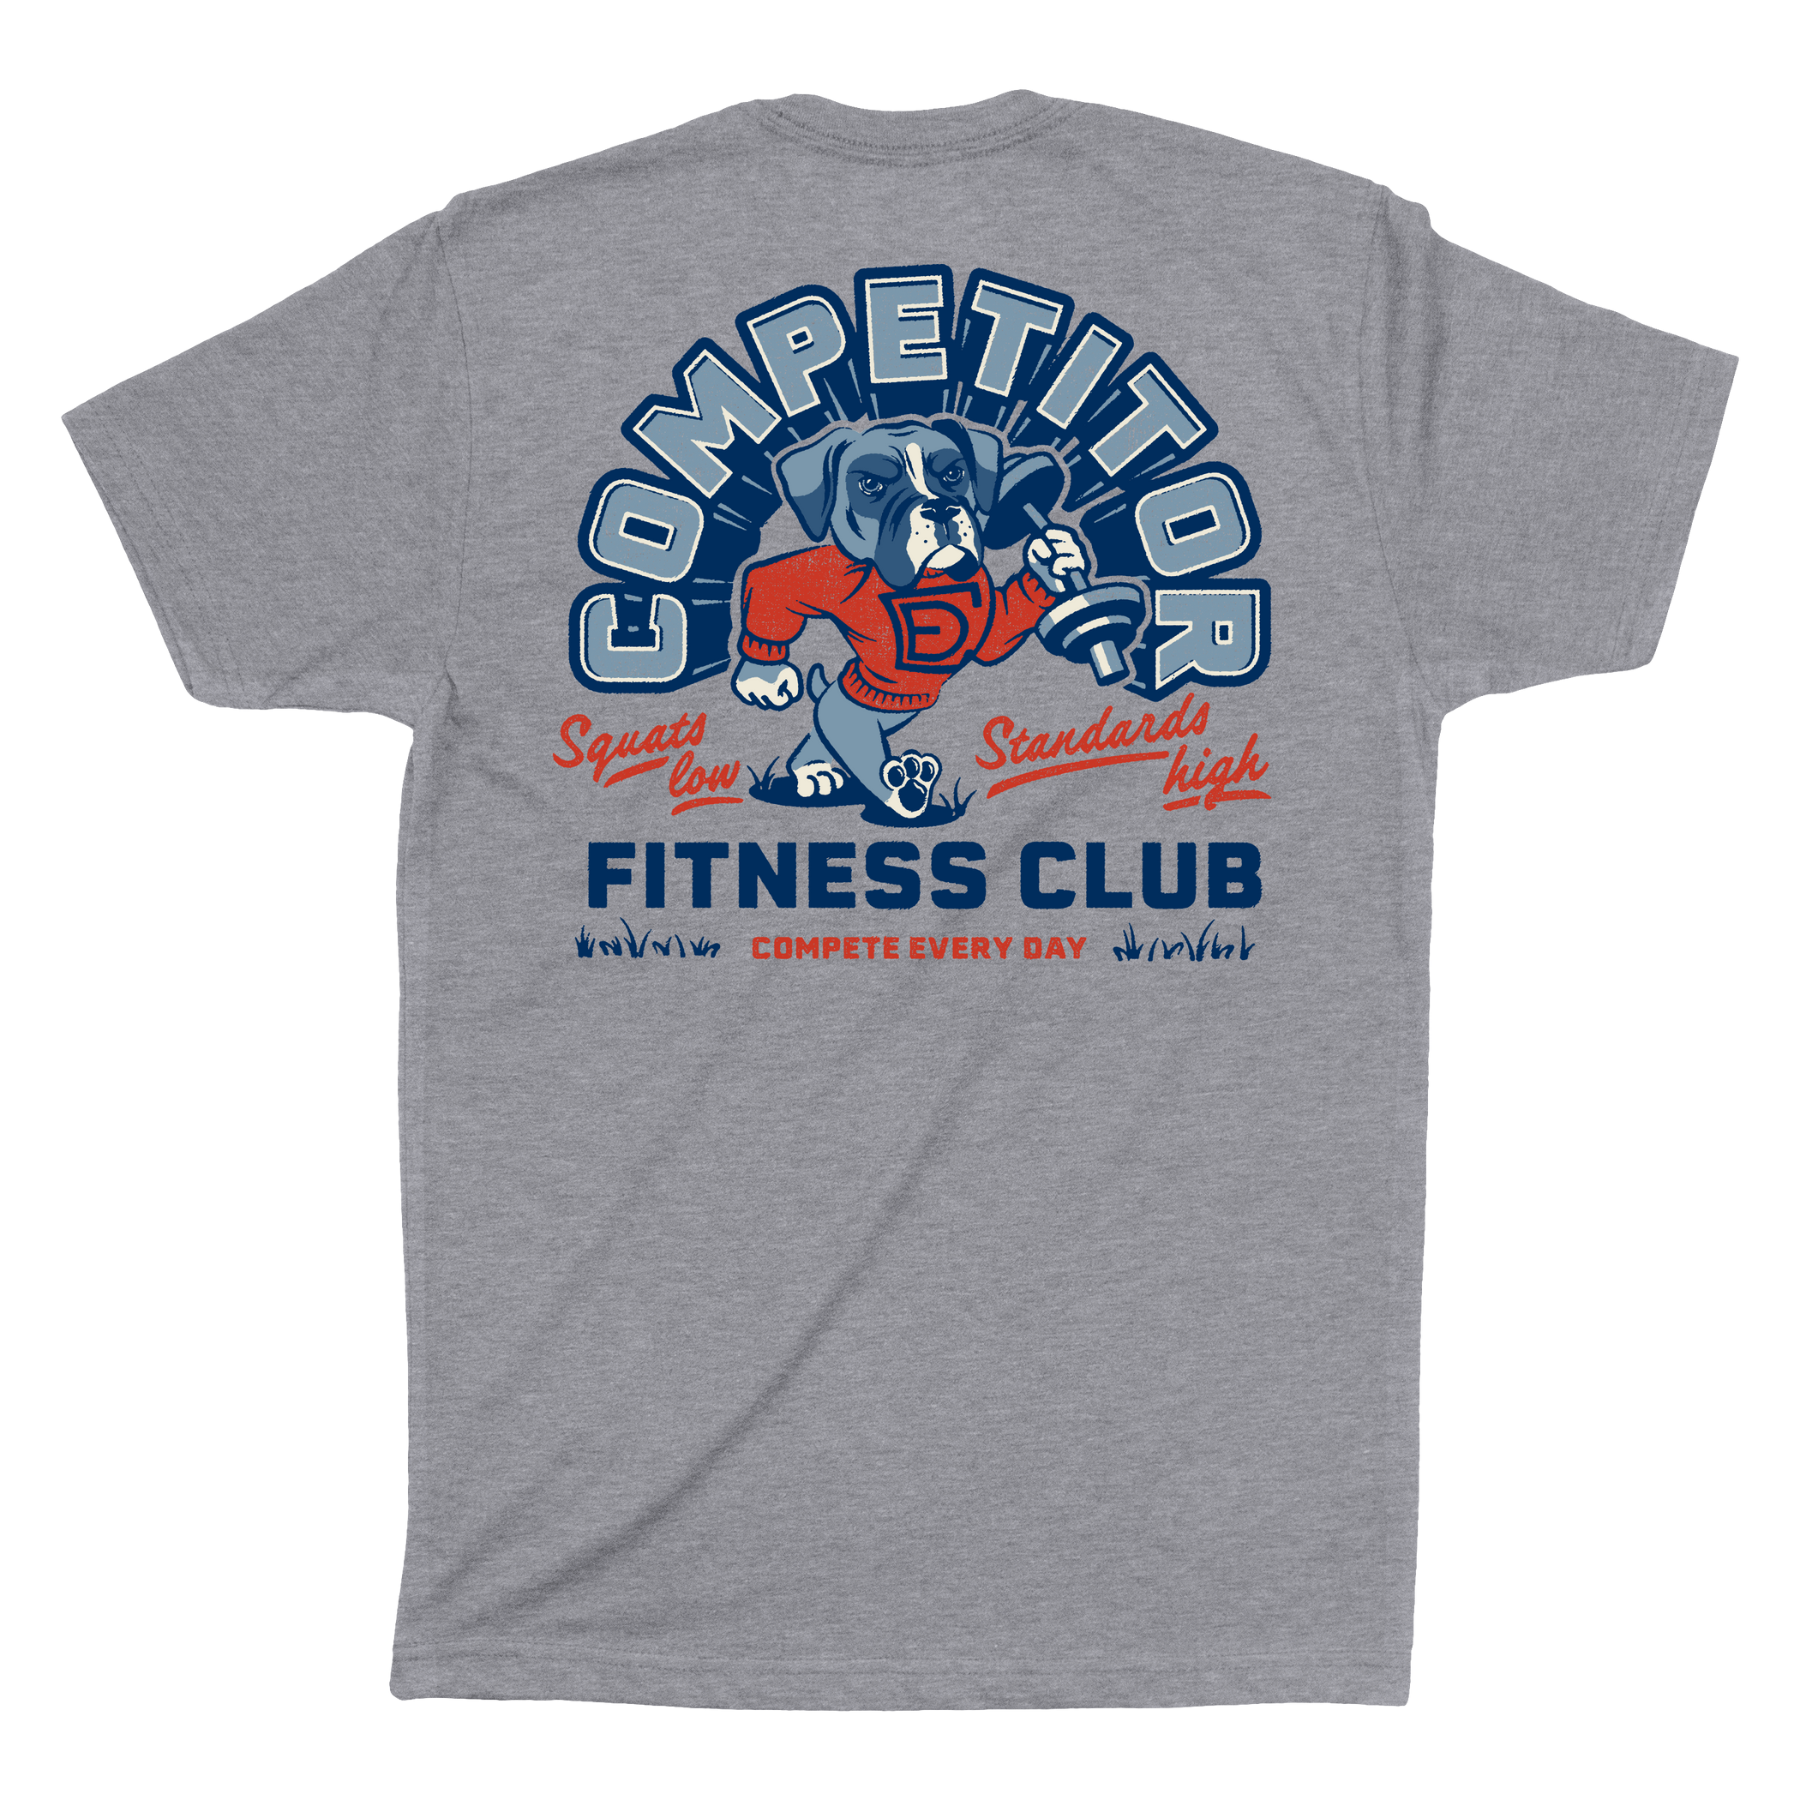 Competitor Fitness Club men's grey shirt